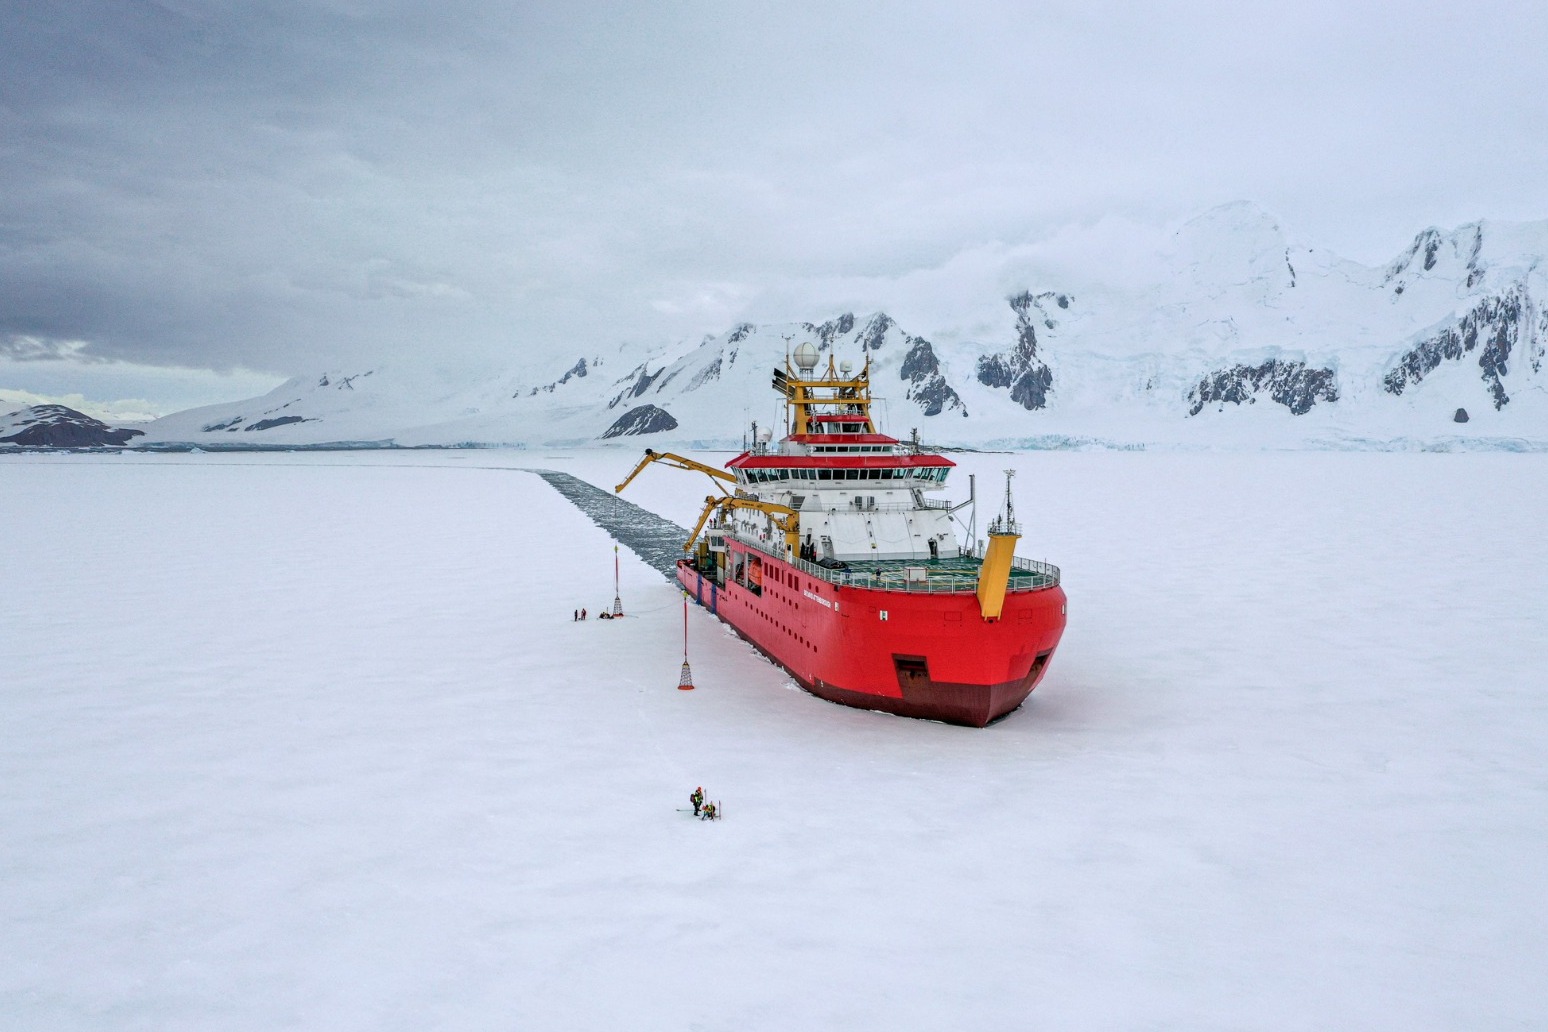 Polar ship RRS Sir David Attenborough completes ice trials in Antarctica